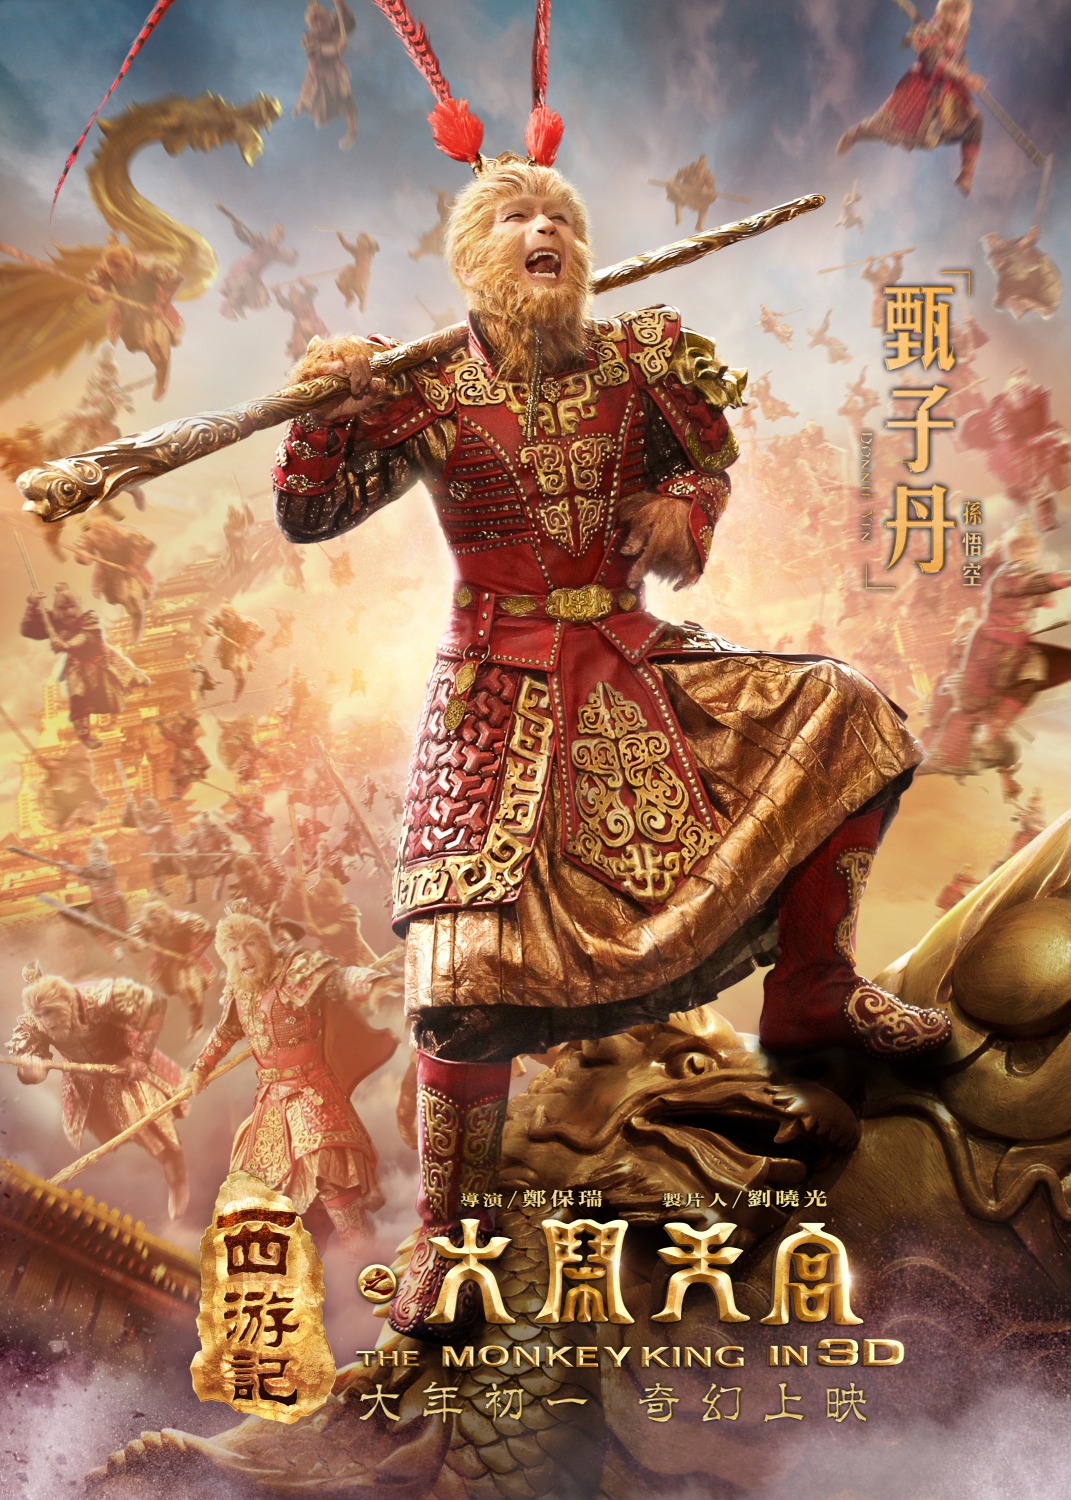 Extra Large Movie Poster Image for Xi you ji: Da nao tian gong (#2 of 2)